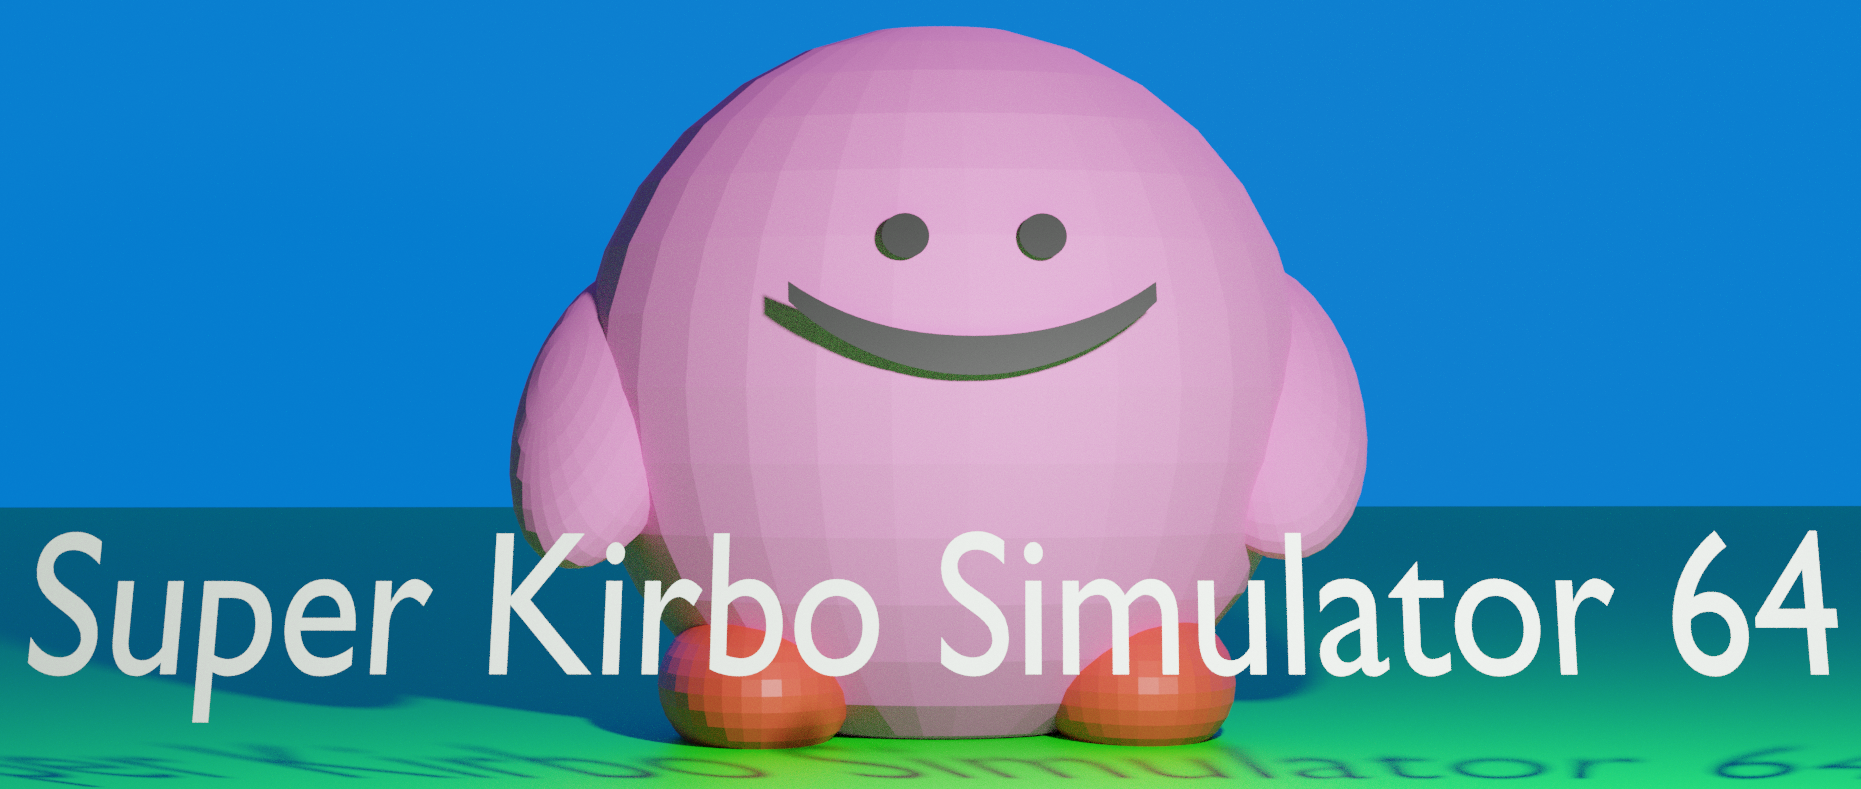 Super Kirbo Simulator 64